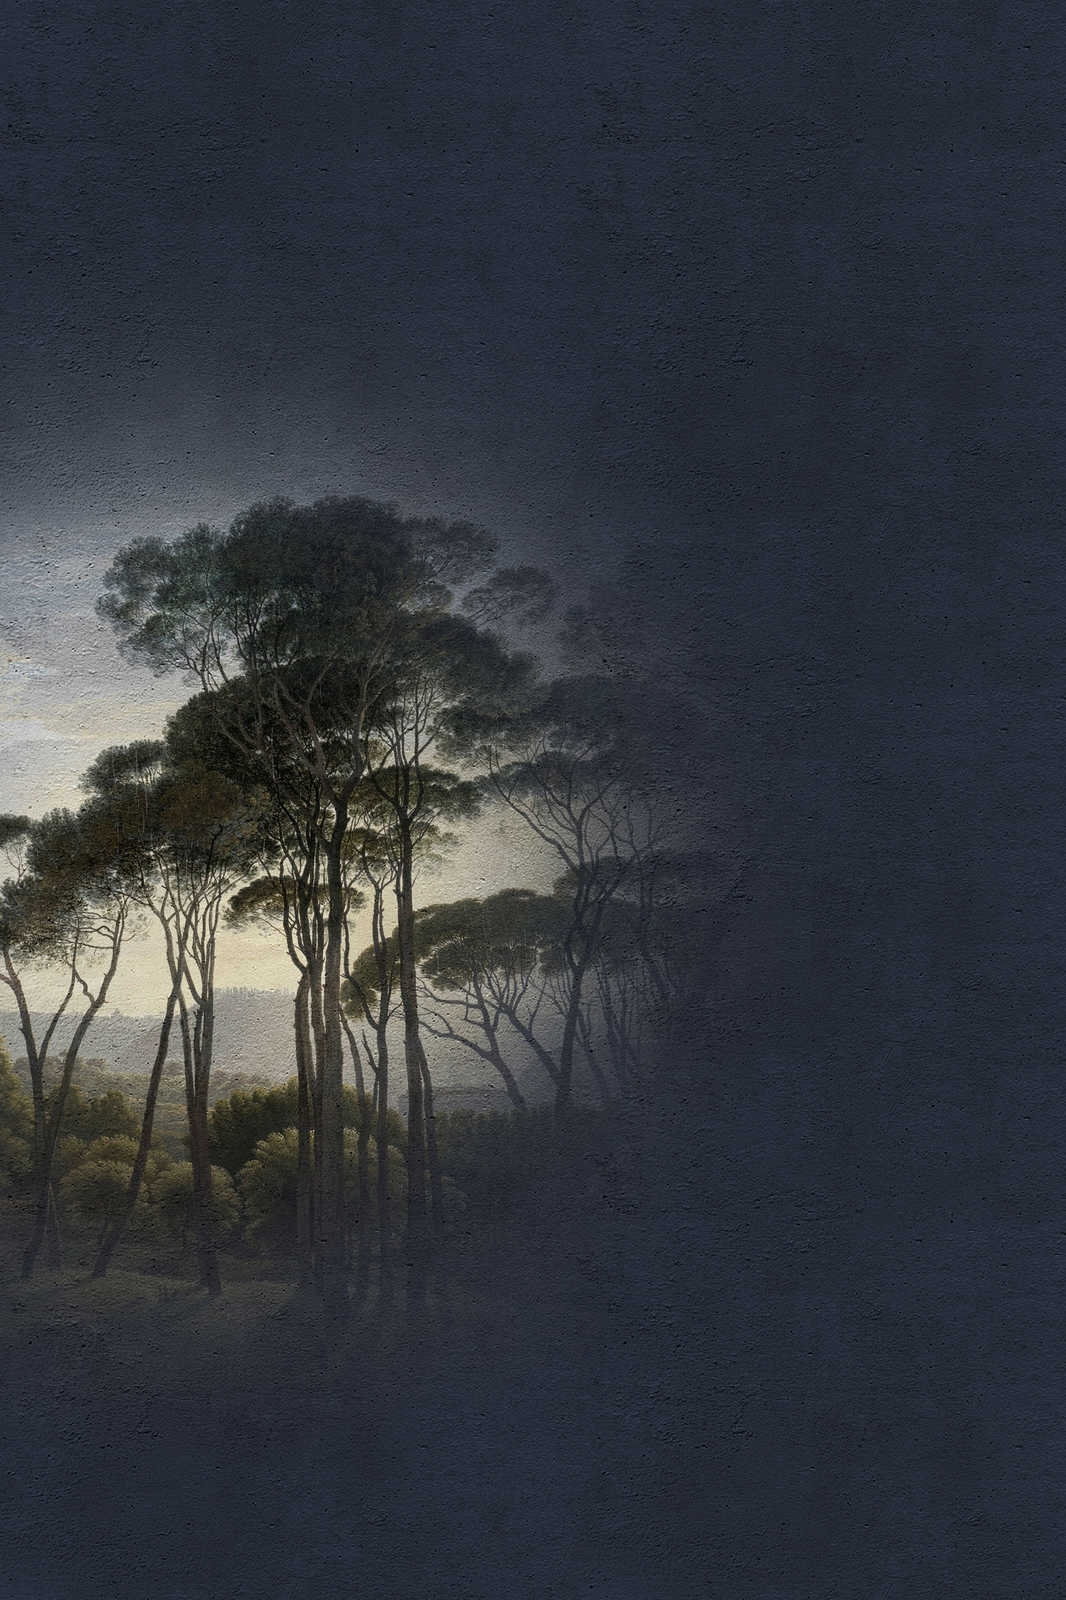             Canvas painting Vintage Frestko Tree Landscape - 0.80 m x 1.20 m
        